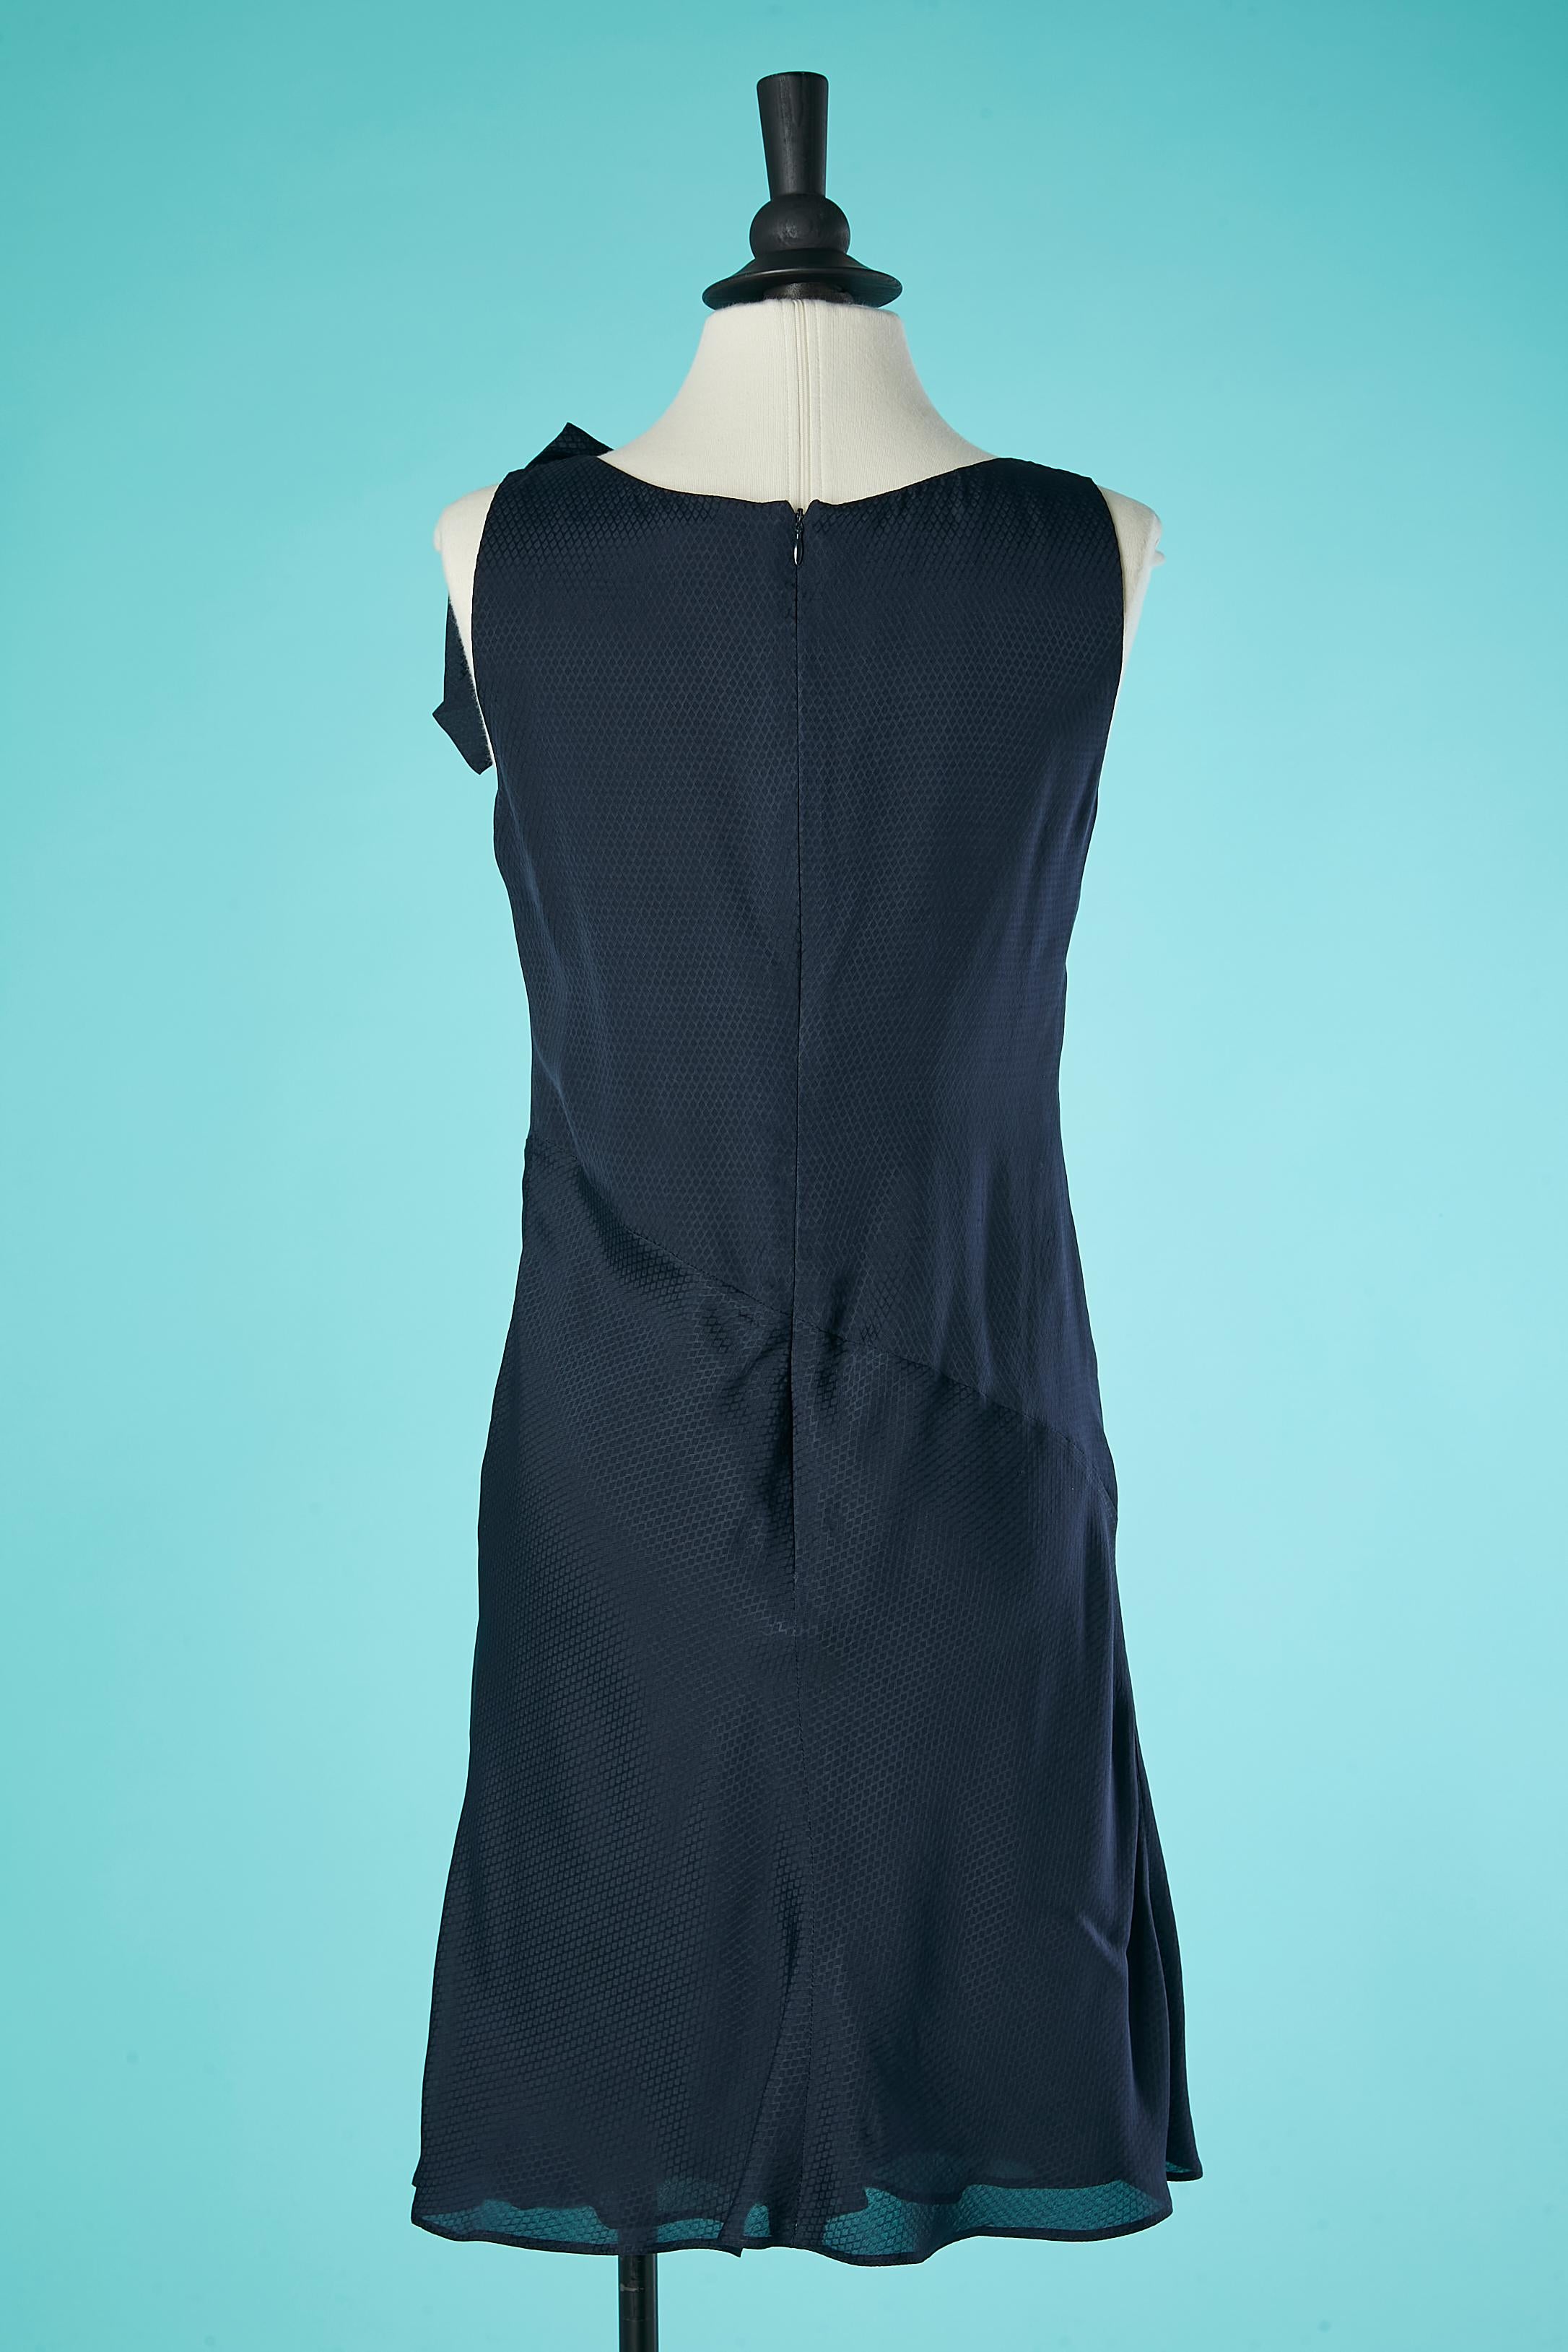 Navy blue silk jacquard sleeveless cocktail dress Giorgio Armani  For Sale 1